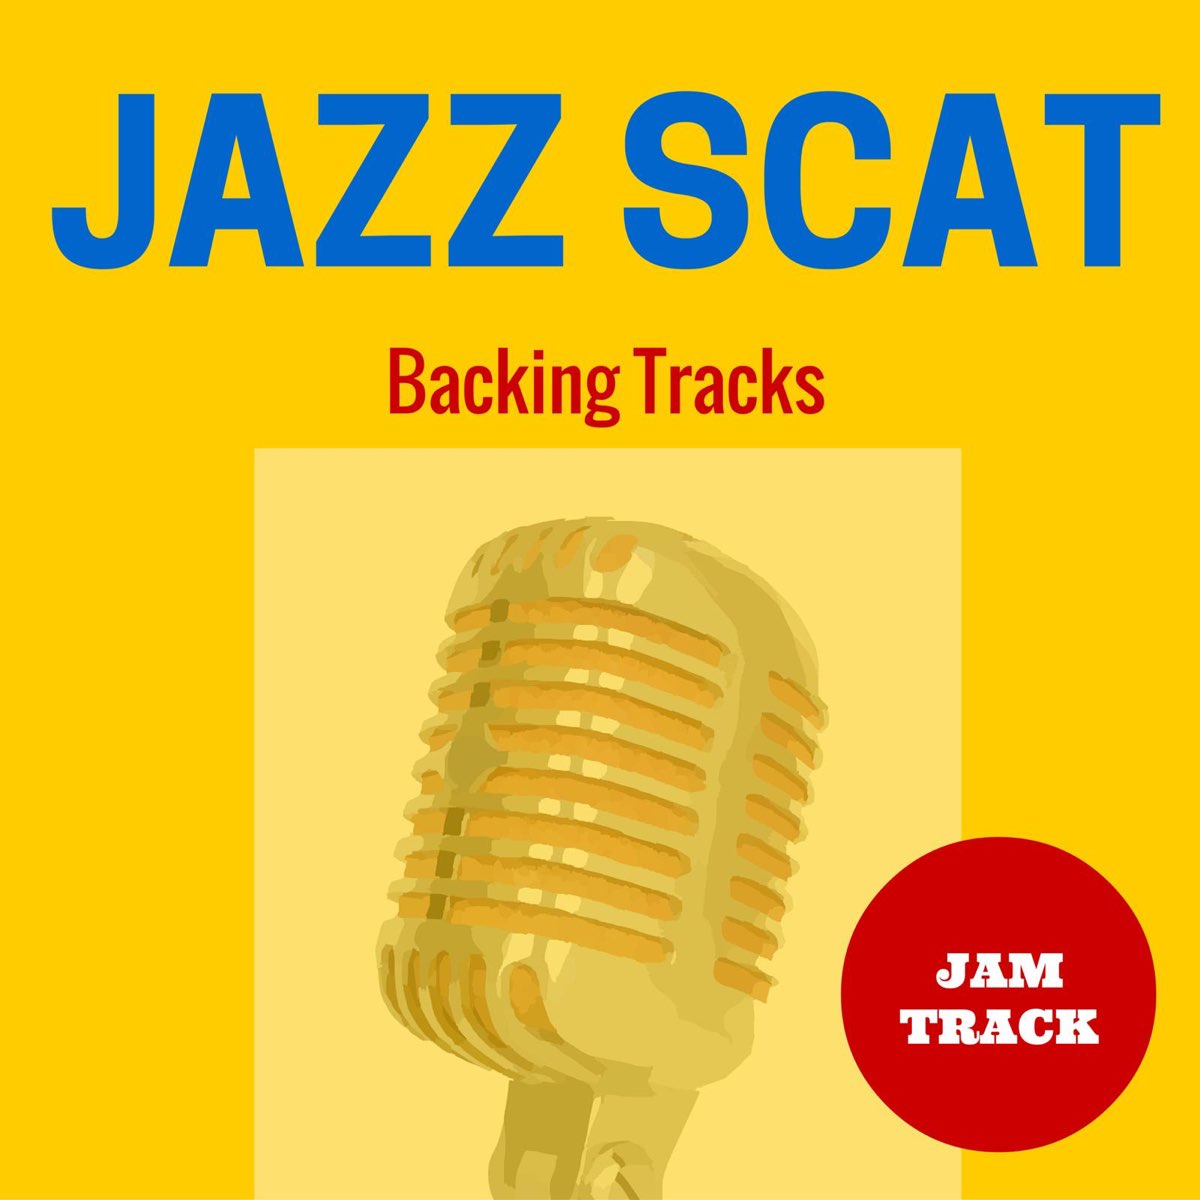 jazz-scat-backing-tracks-by-jam-track-on-apple-music